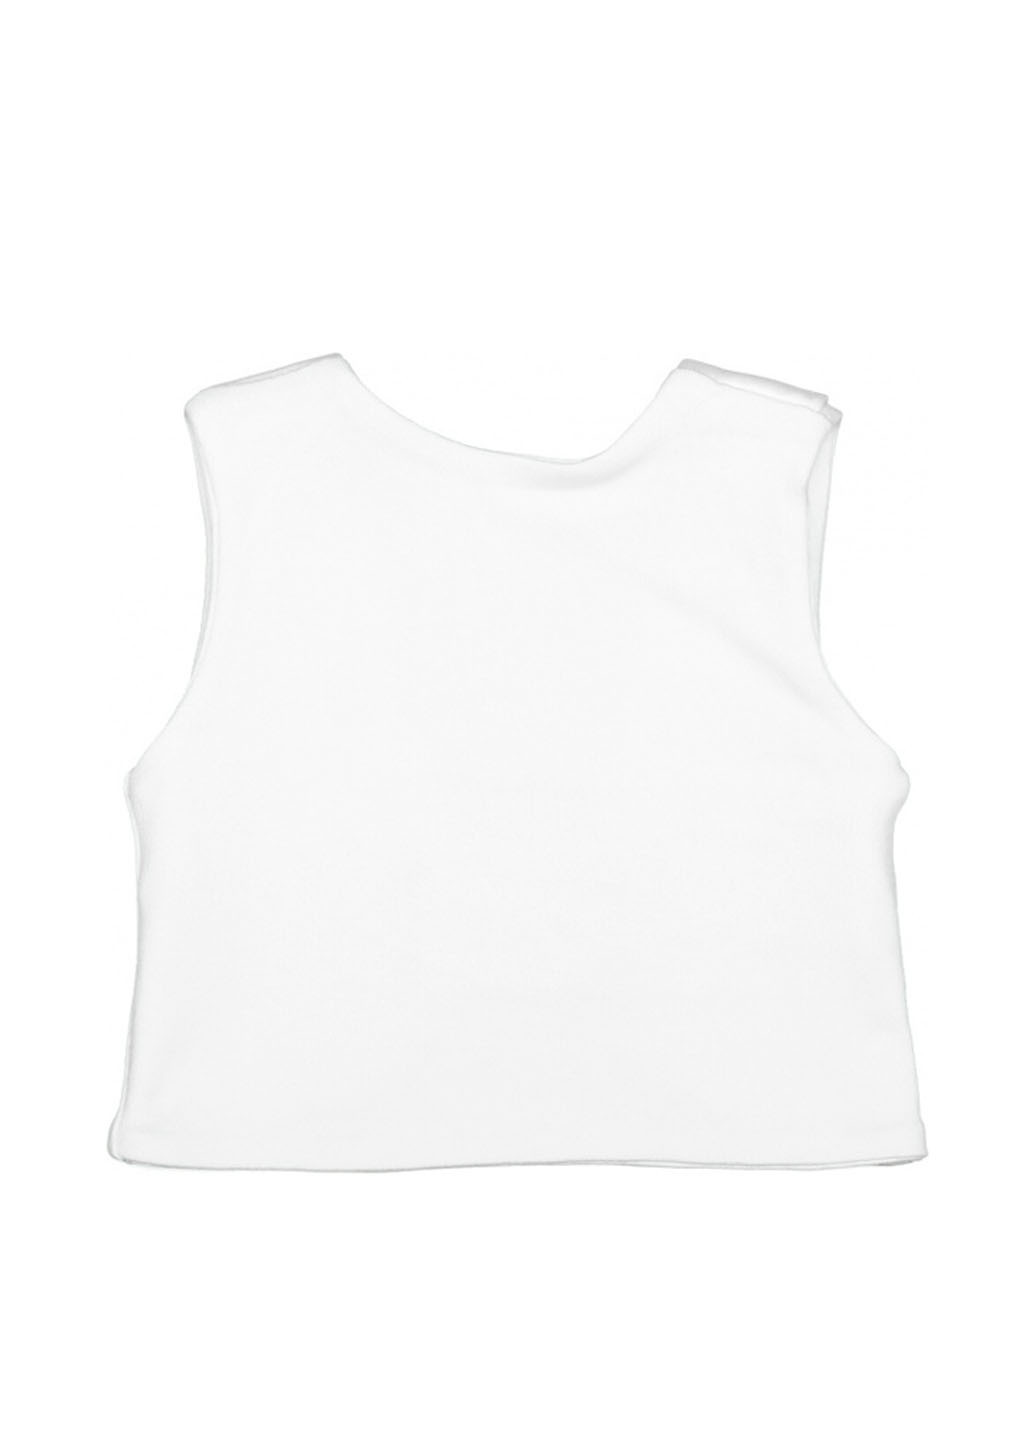 Білий демісезонний комплект (сорочка, жилет, повзунки, шапка) BetiS